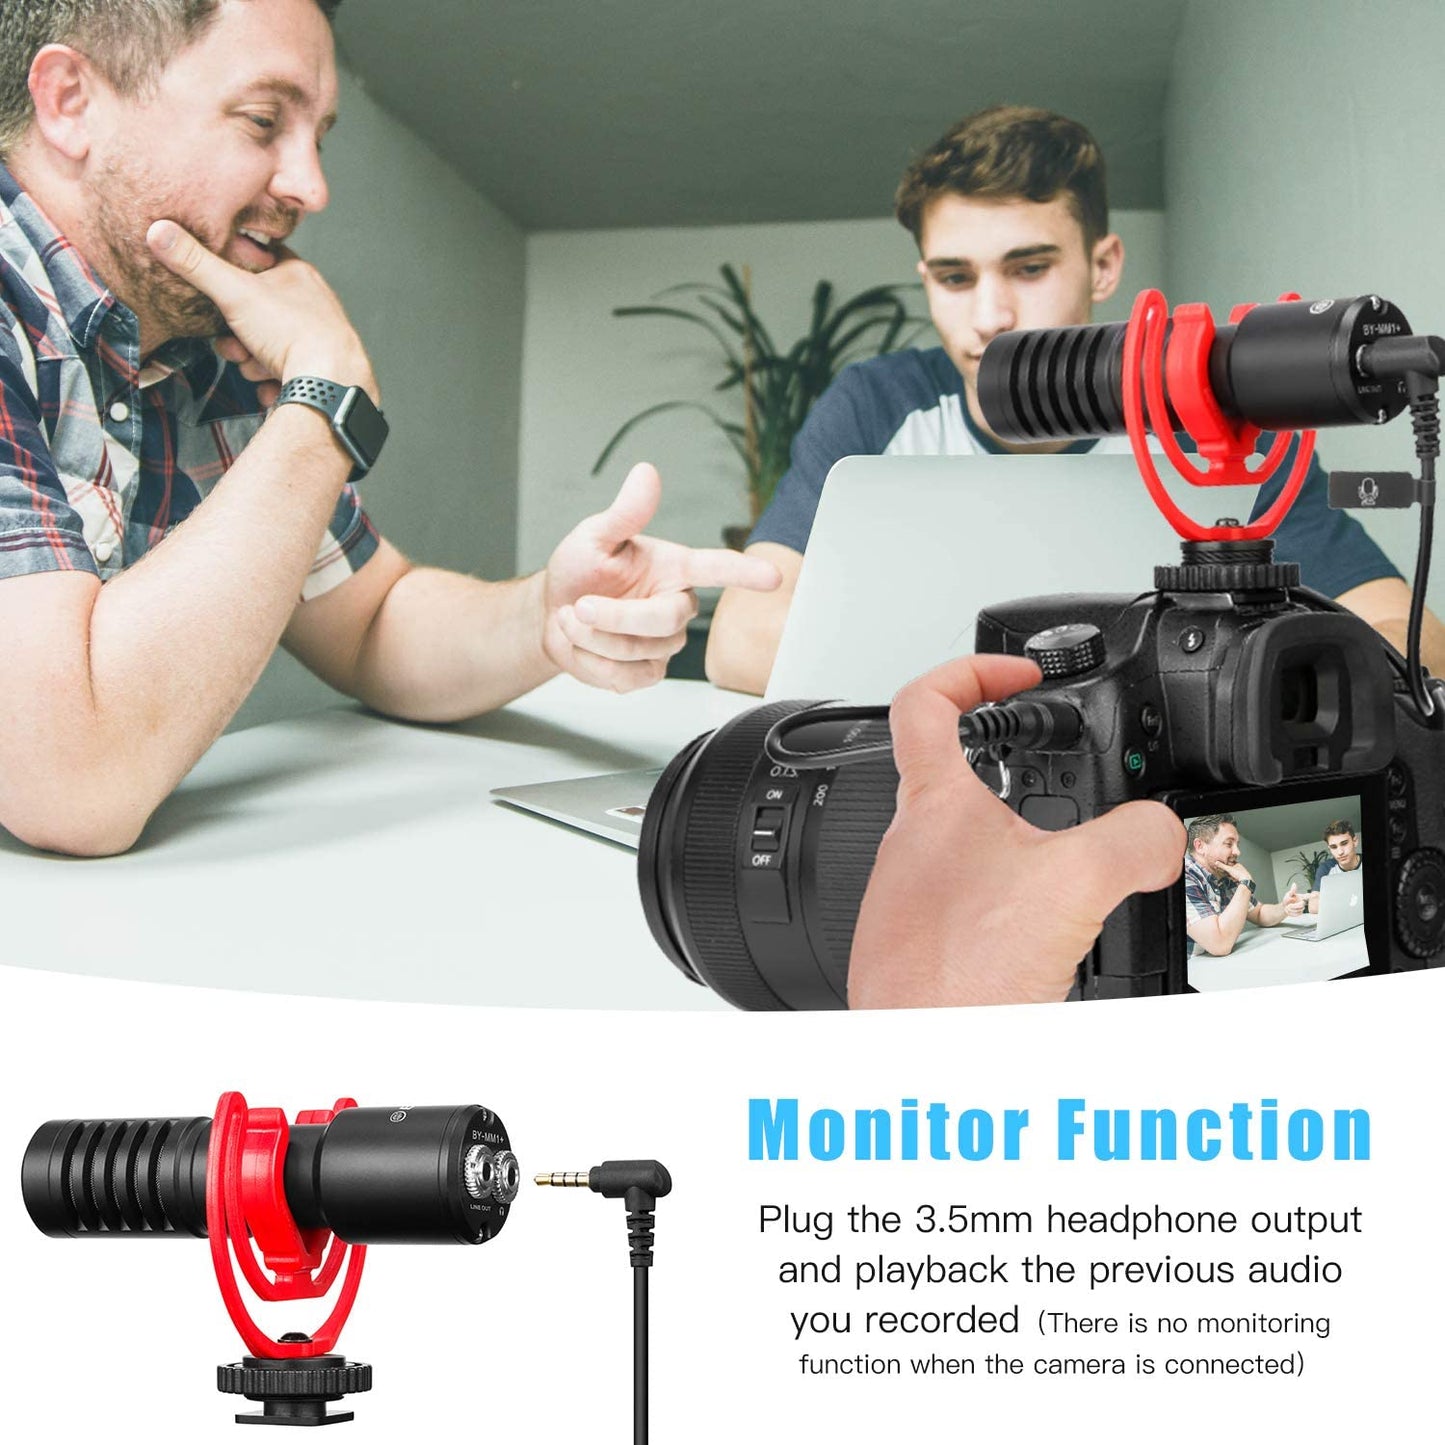 Boya New Camera Super-Cardioid Video Shotgun Condenser Microphone By-Mm1+ With Headphone Monitoring - Games Corner